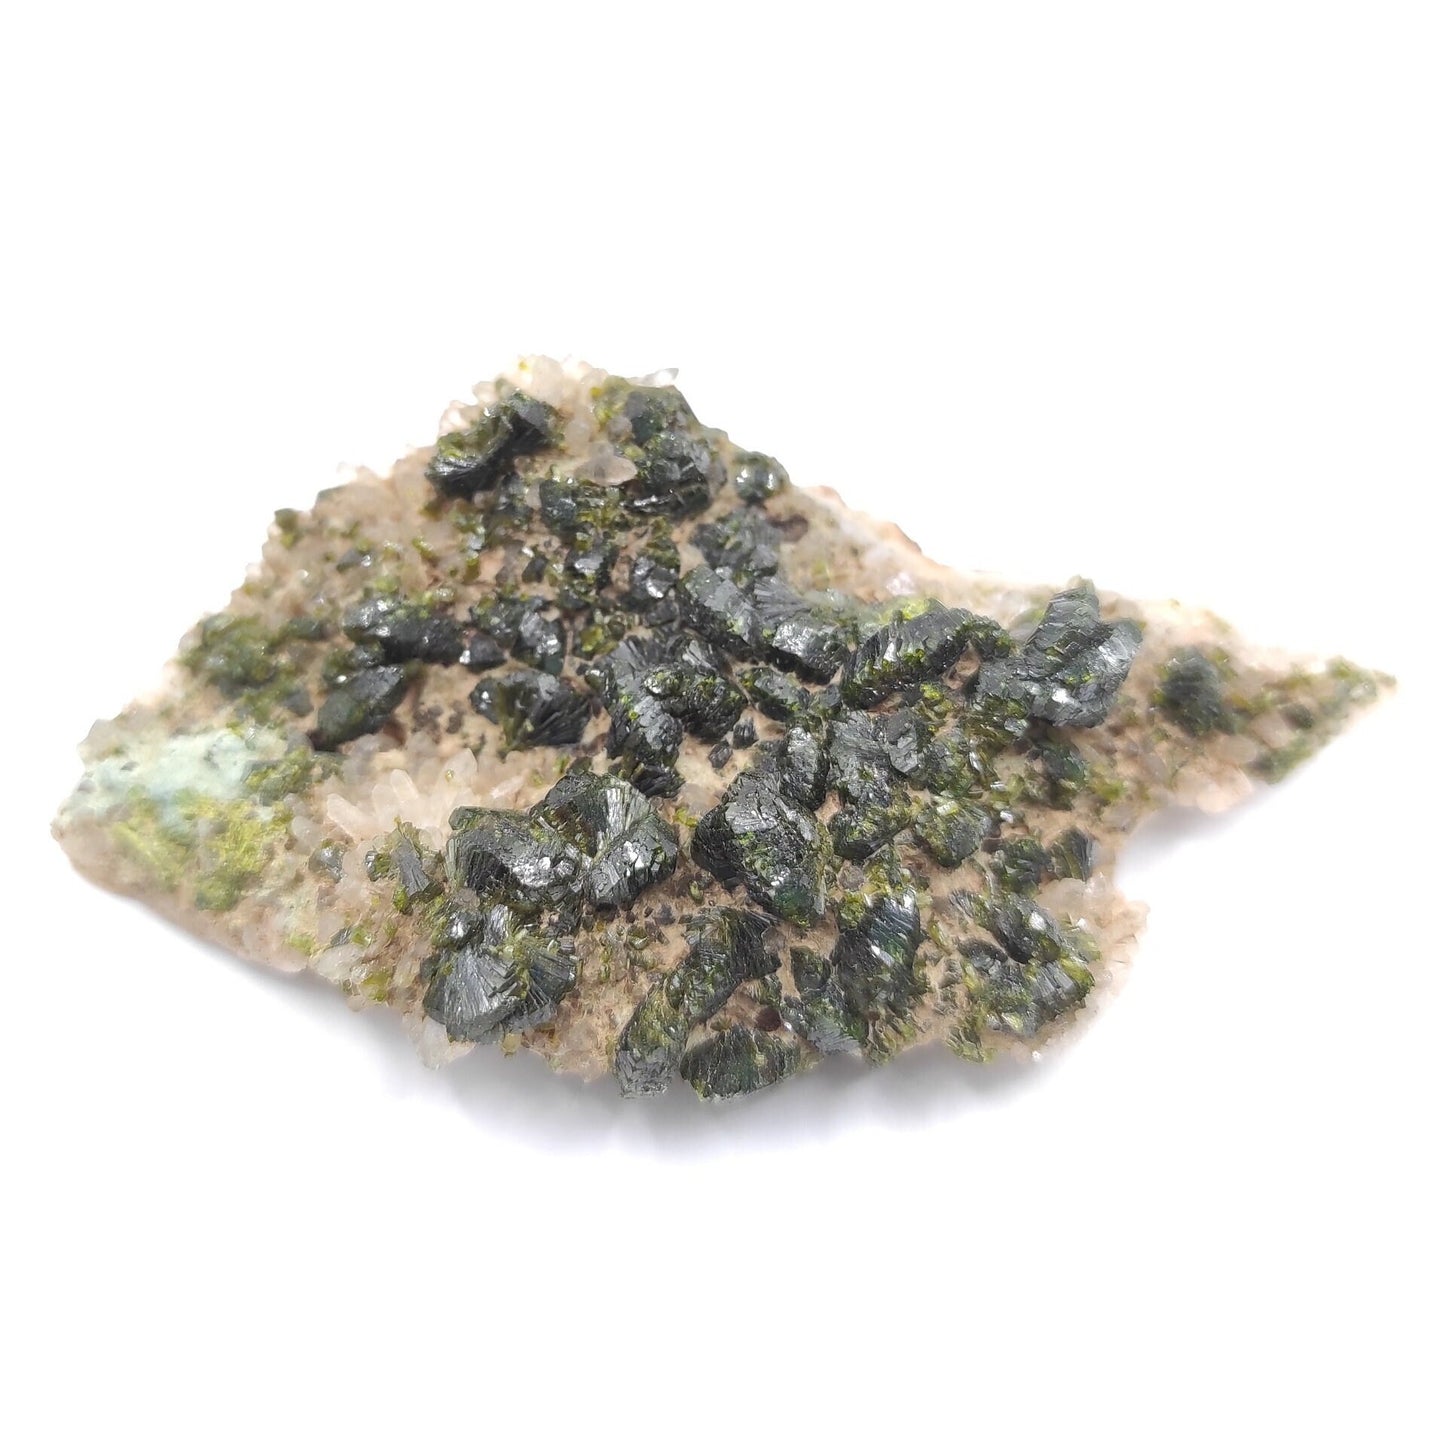 69g Epidote with Quartz - Imilchil, Morocco - Green Epidote Crystal Cluster - Raw Mineral Specimen - Green Epidote and Quartz Crystal